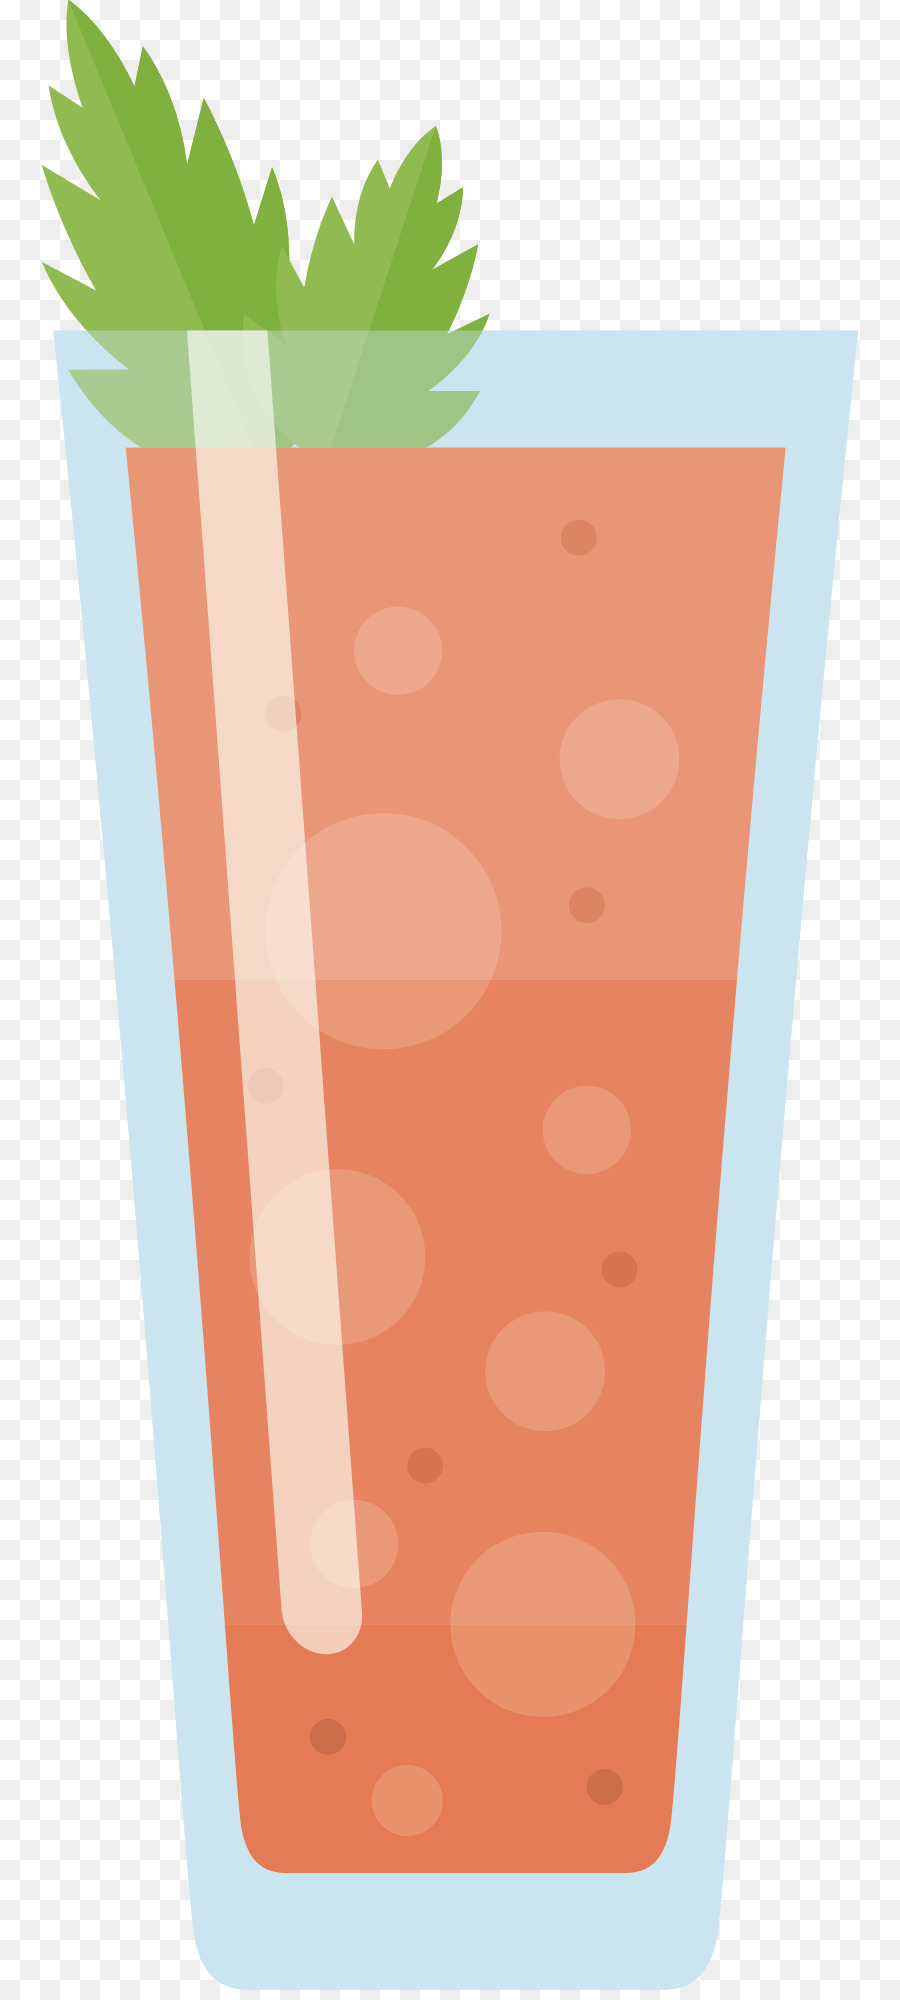 Grapefruit-Saft Trinken - Vektor von hand bemalt leckeren grapefruit Saft